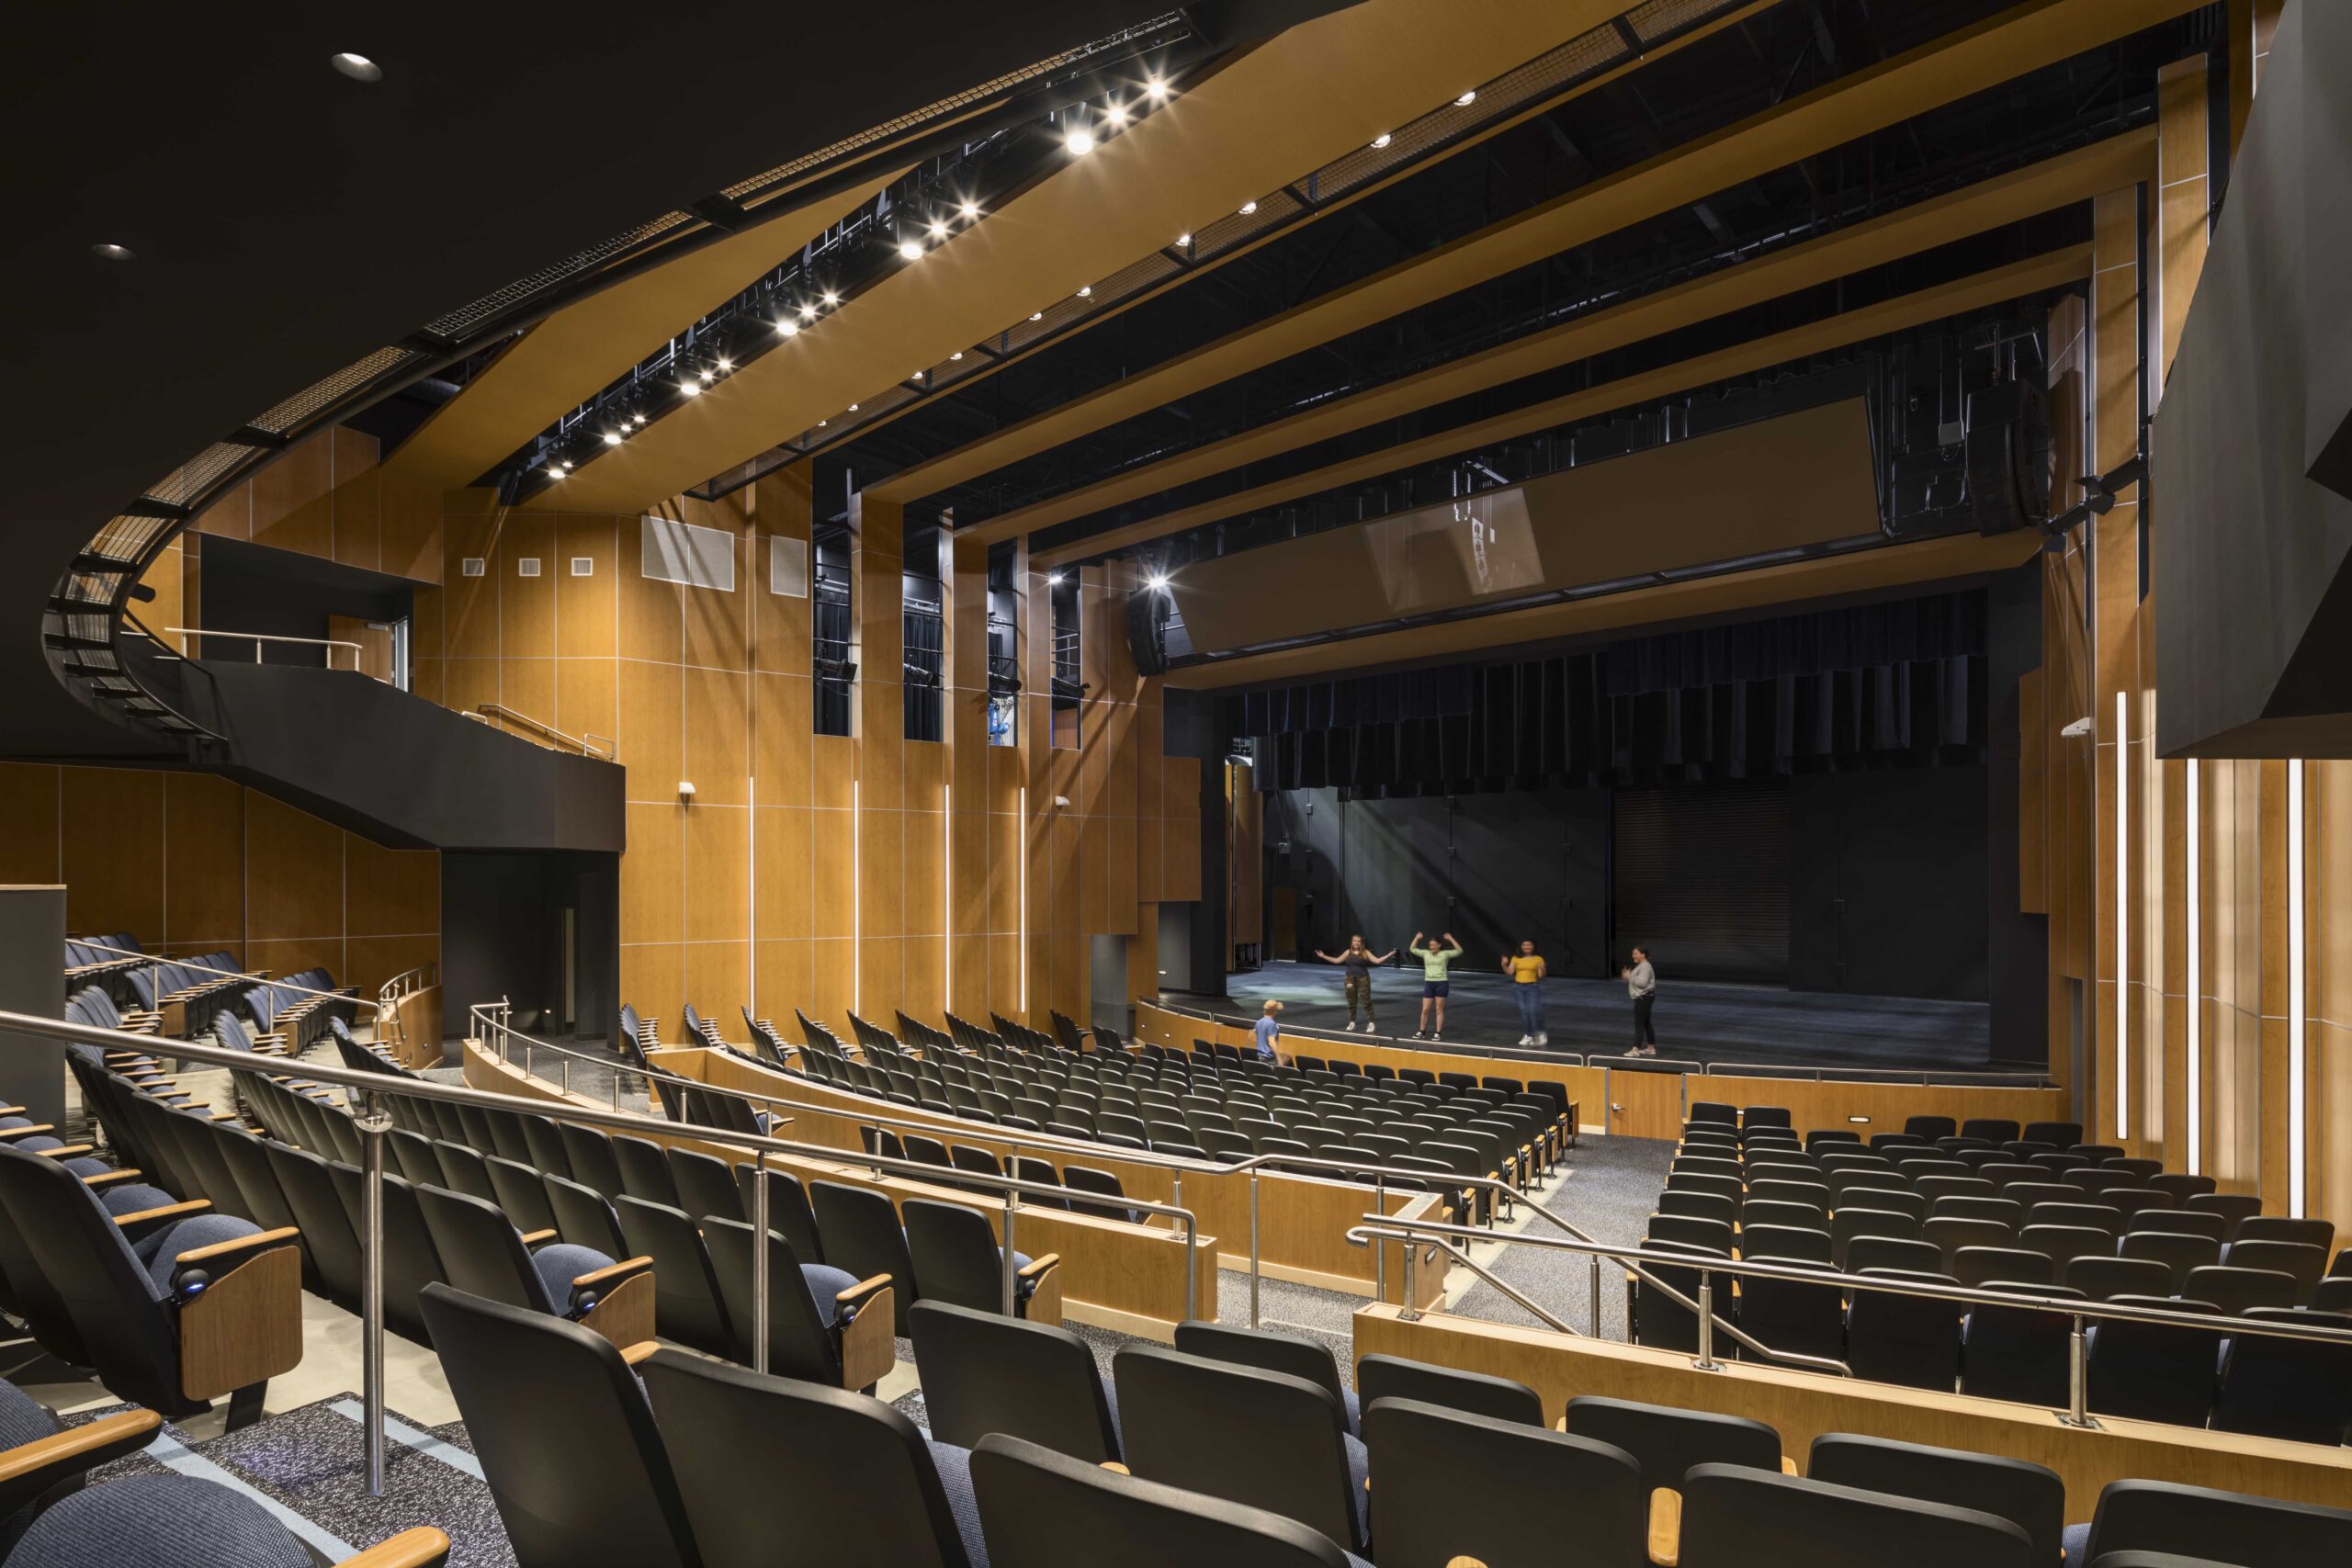 Pinole Valley High School – Performing Arts Center